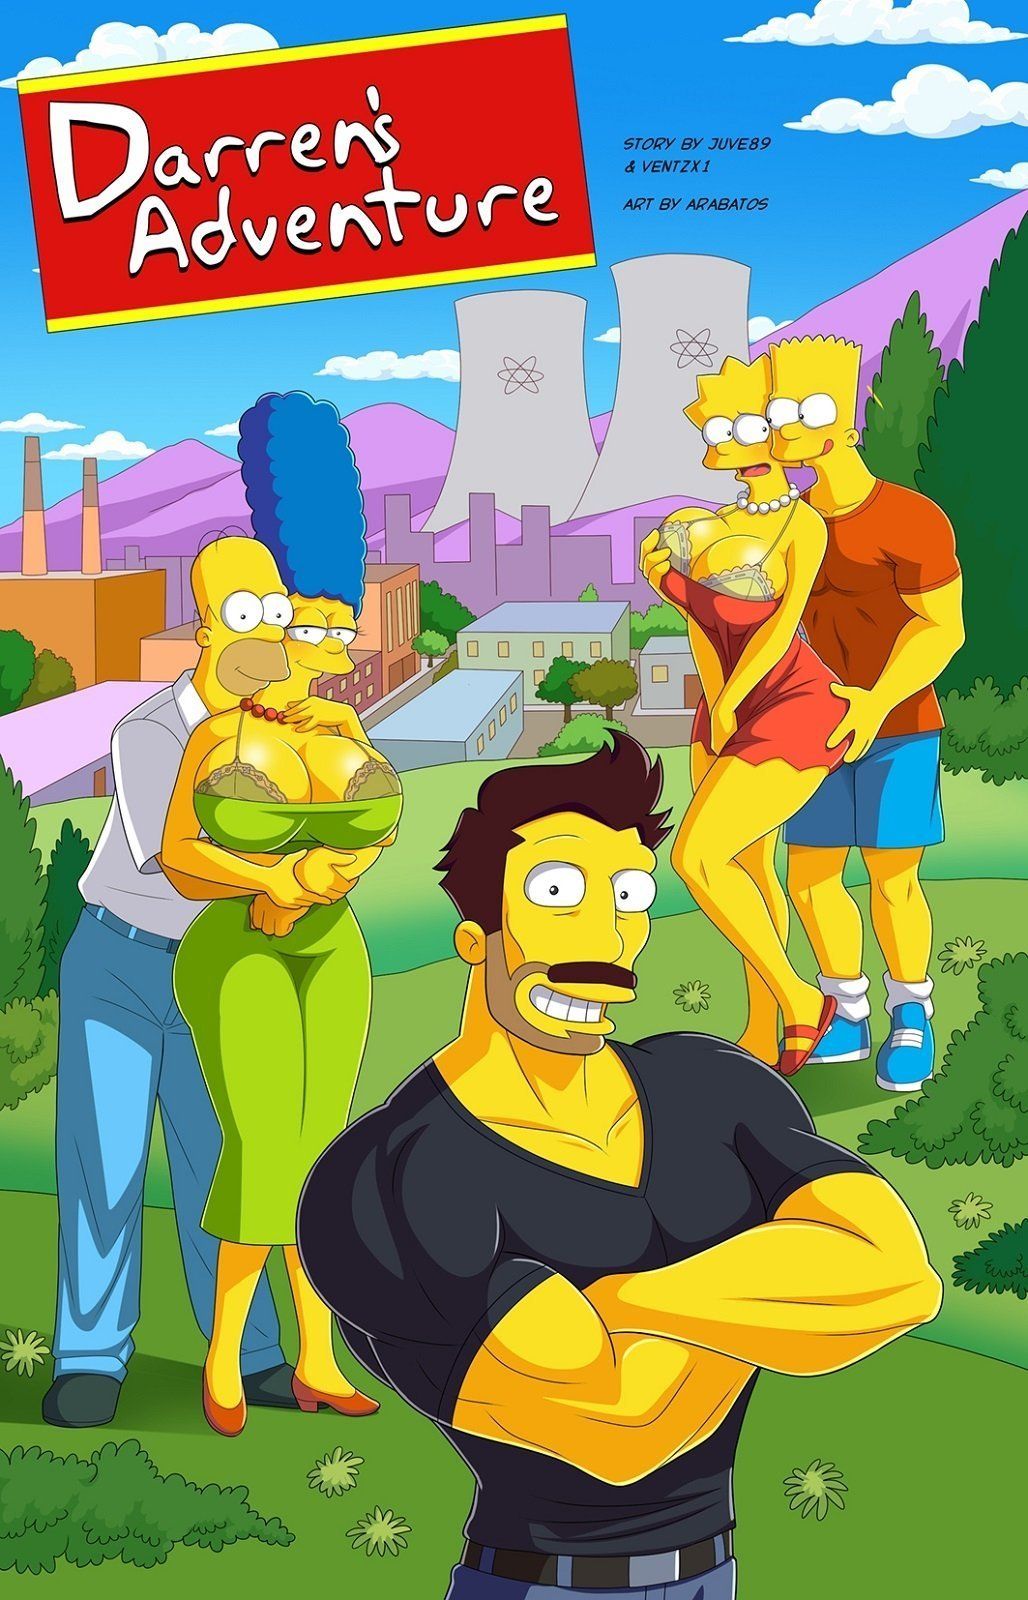 Simpsons nude